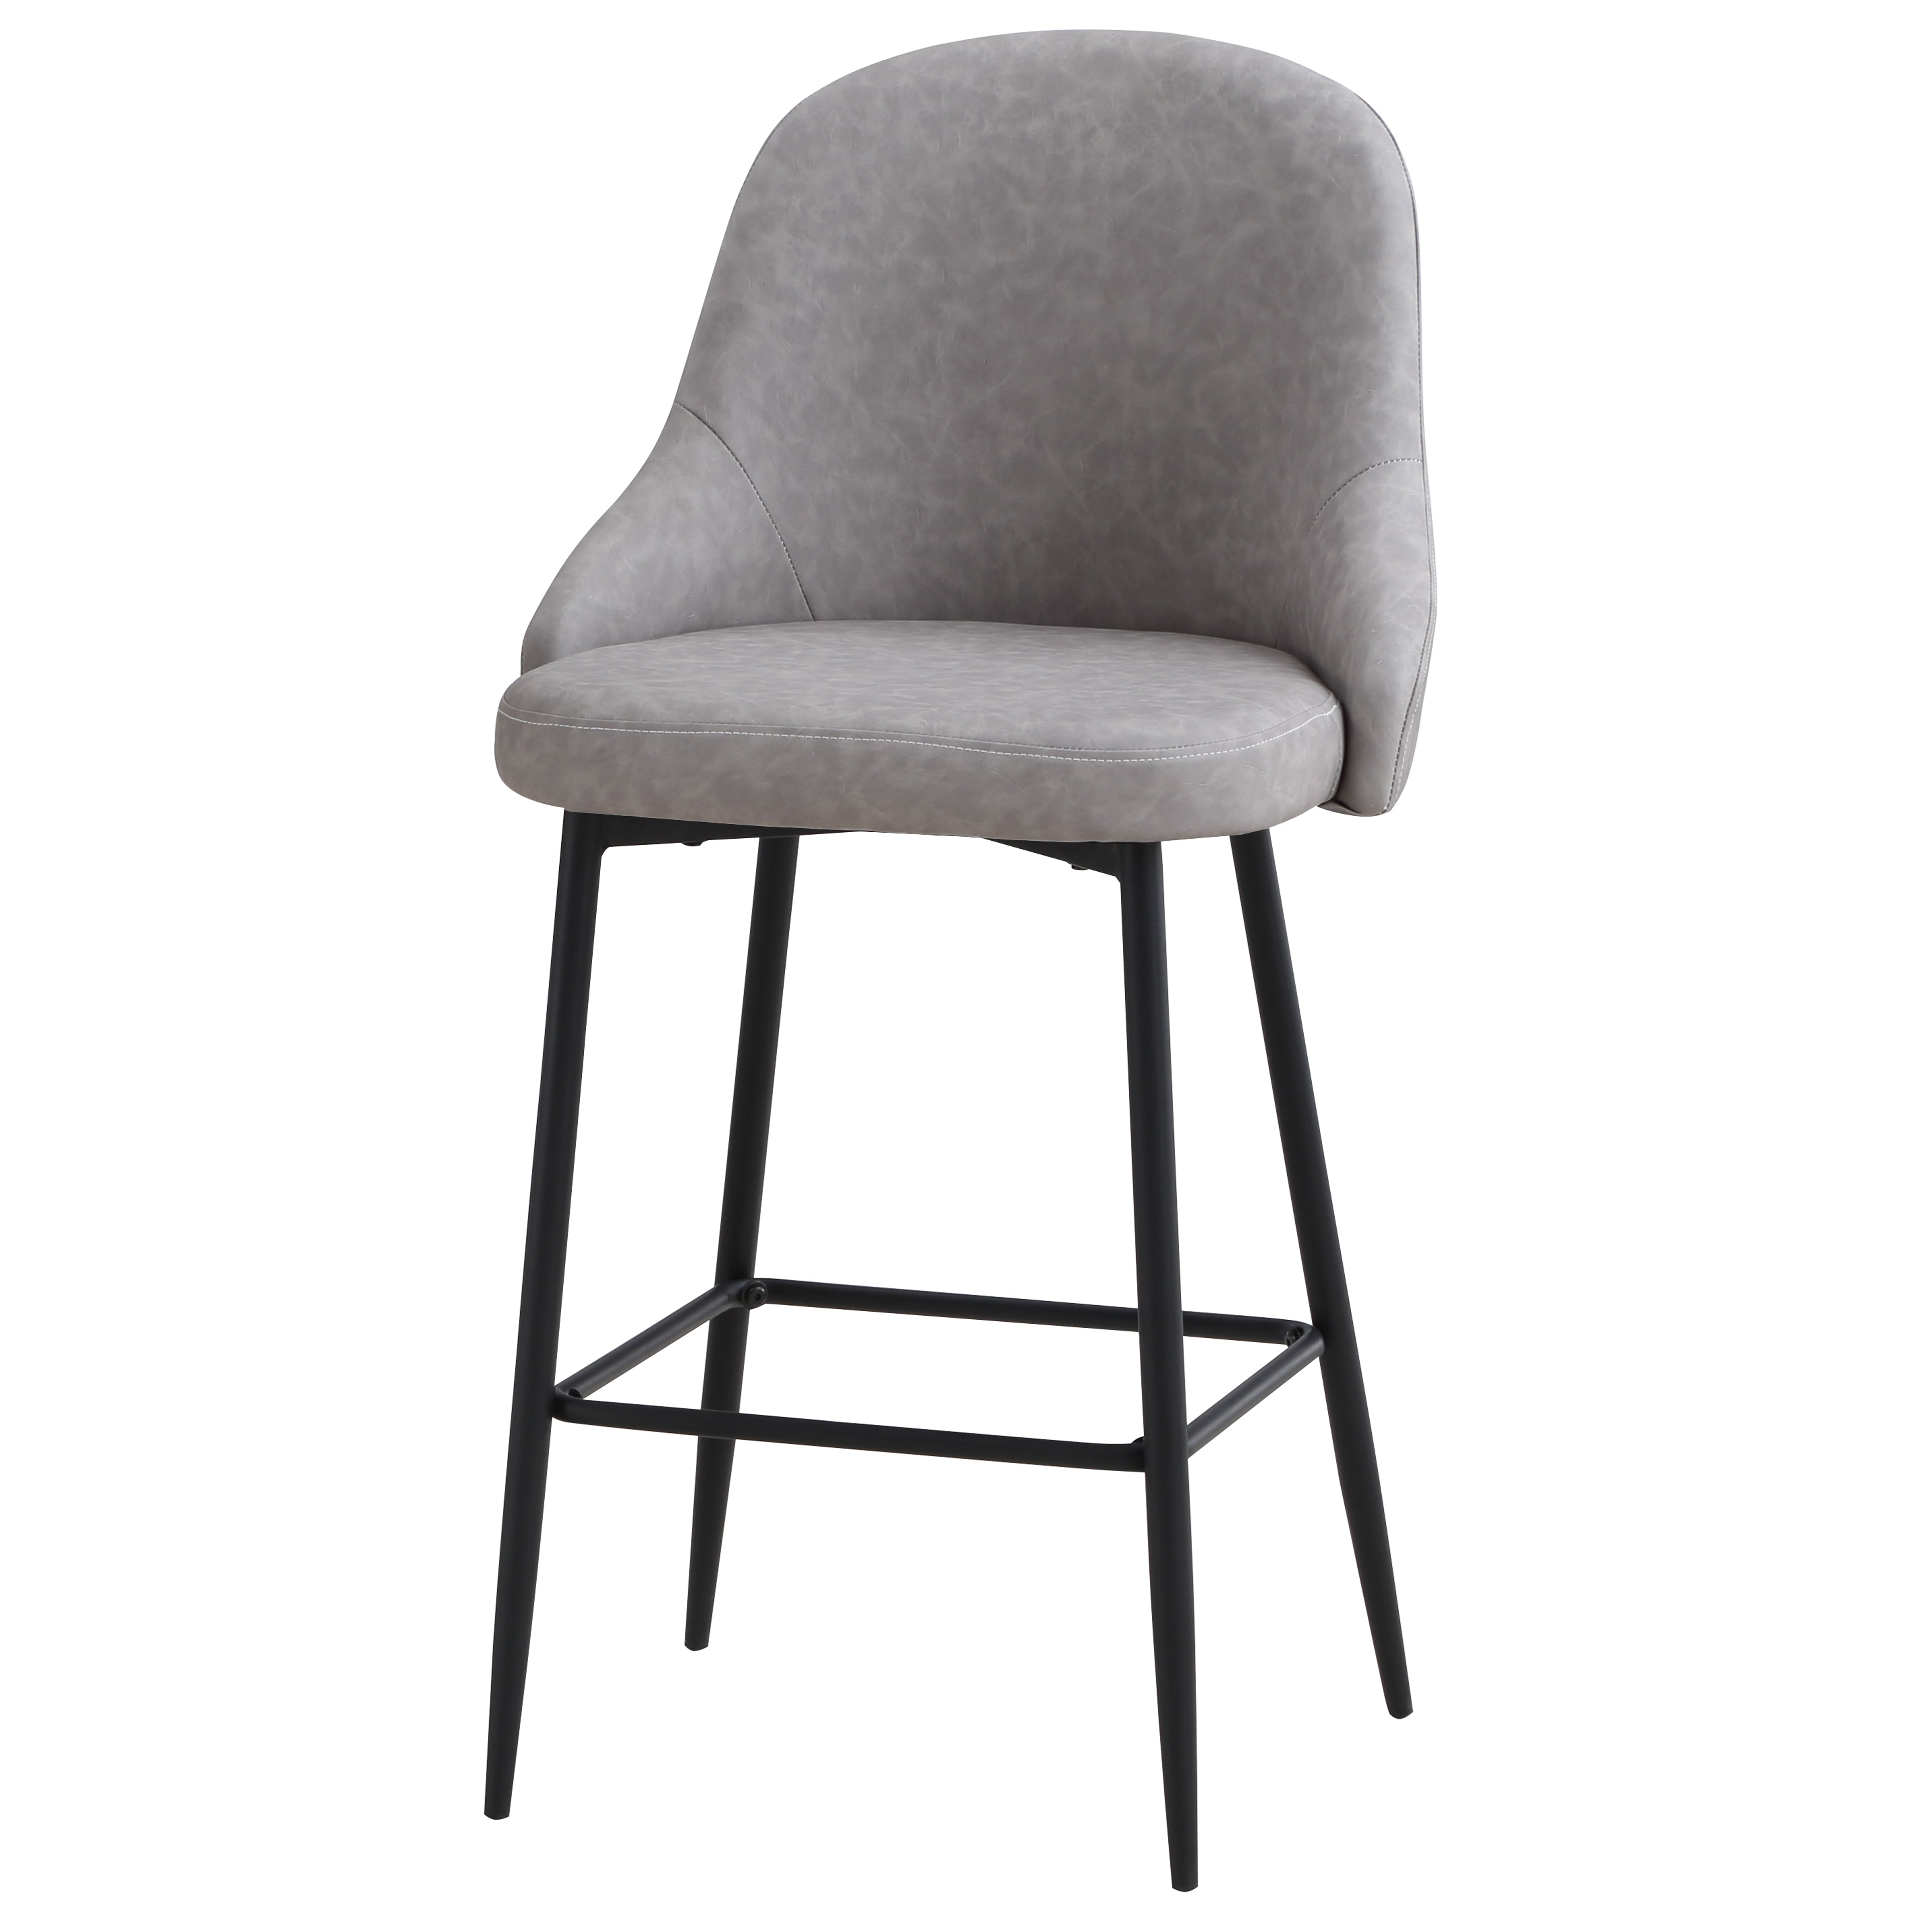 Lamesa Counter Chairs (Set of 2)